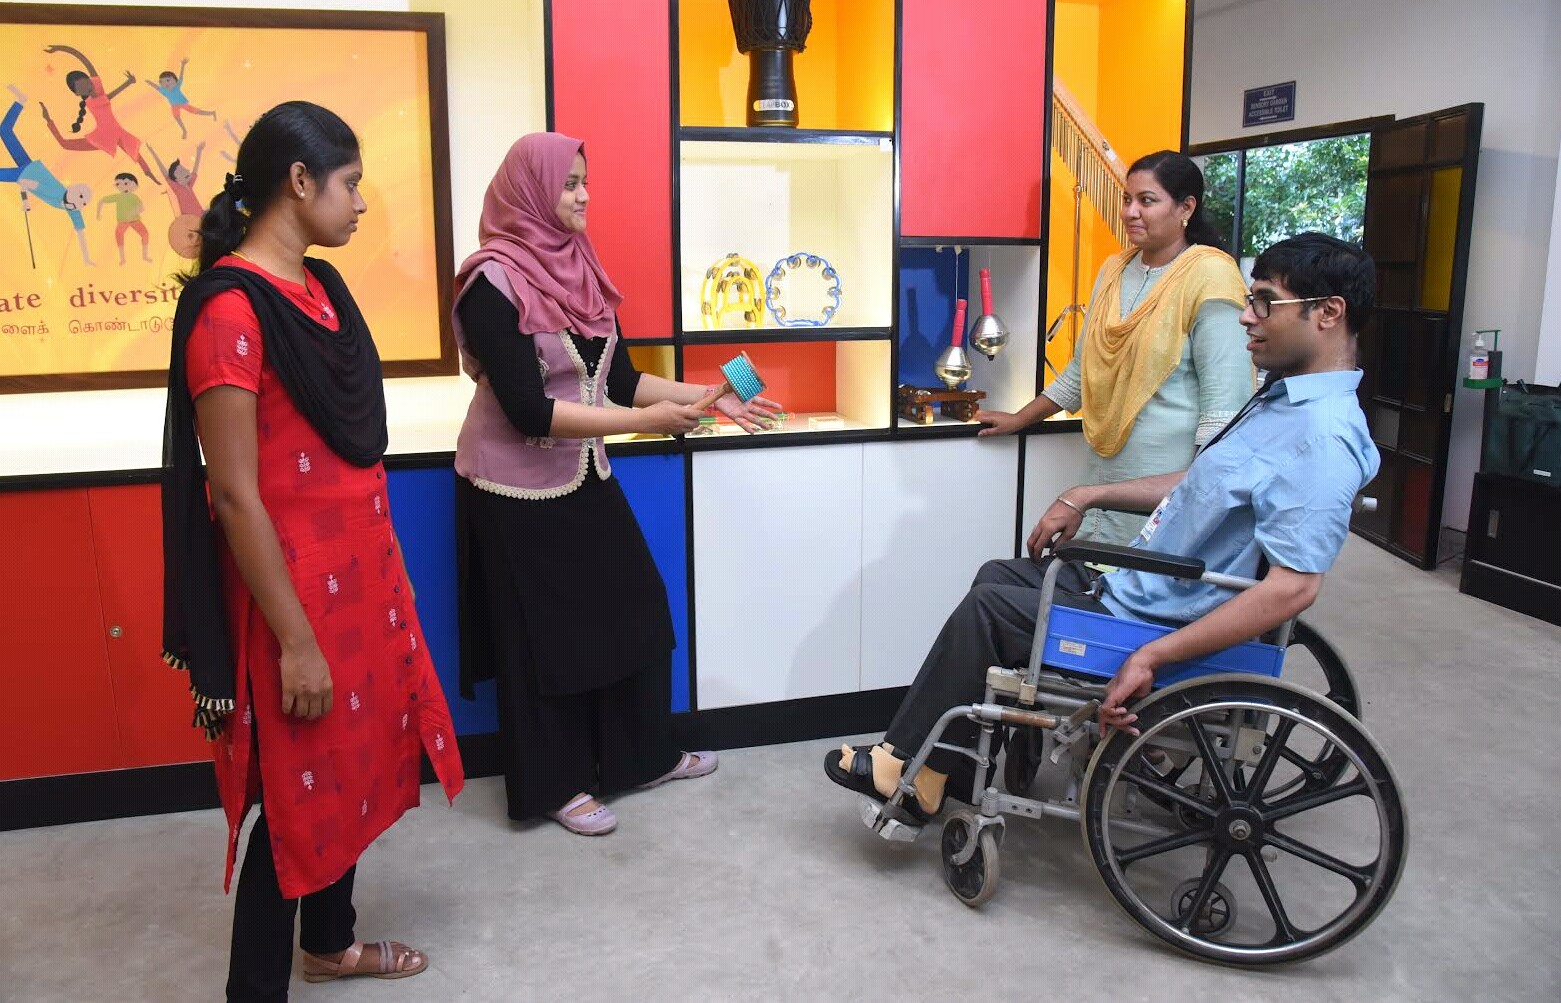 museum for disable persons in chennai  museum for disable persons  disable persons  handicap  museum foe handicap  மாற்றுத்திறனாளிகளுக்கான அருங்காட்சியகம்  அருங்காட்சியகம்  மாற்றுத்திறனாளிகள்  சென்னை மாற்றுத்திறனாளிகளுக்கான அருங்காட்சியகம்